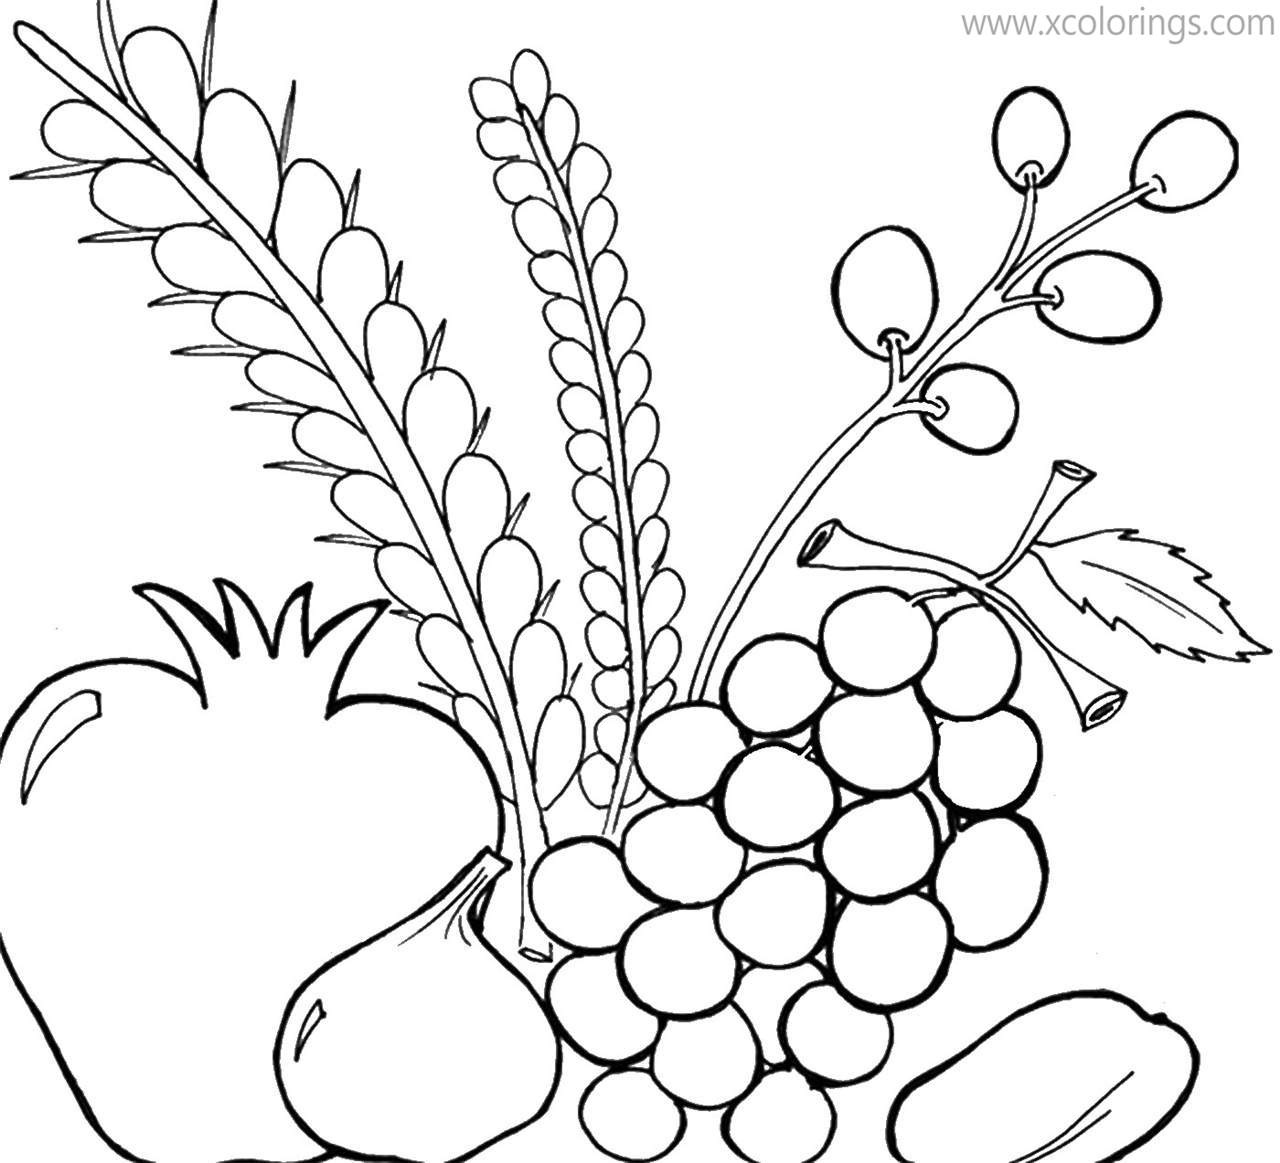 Free Sukkot Food Coloring Pages printable